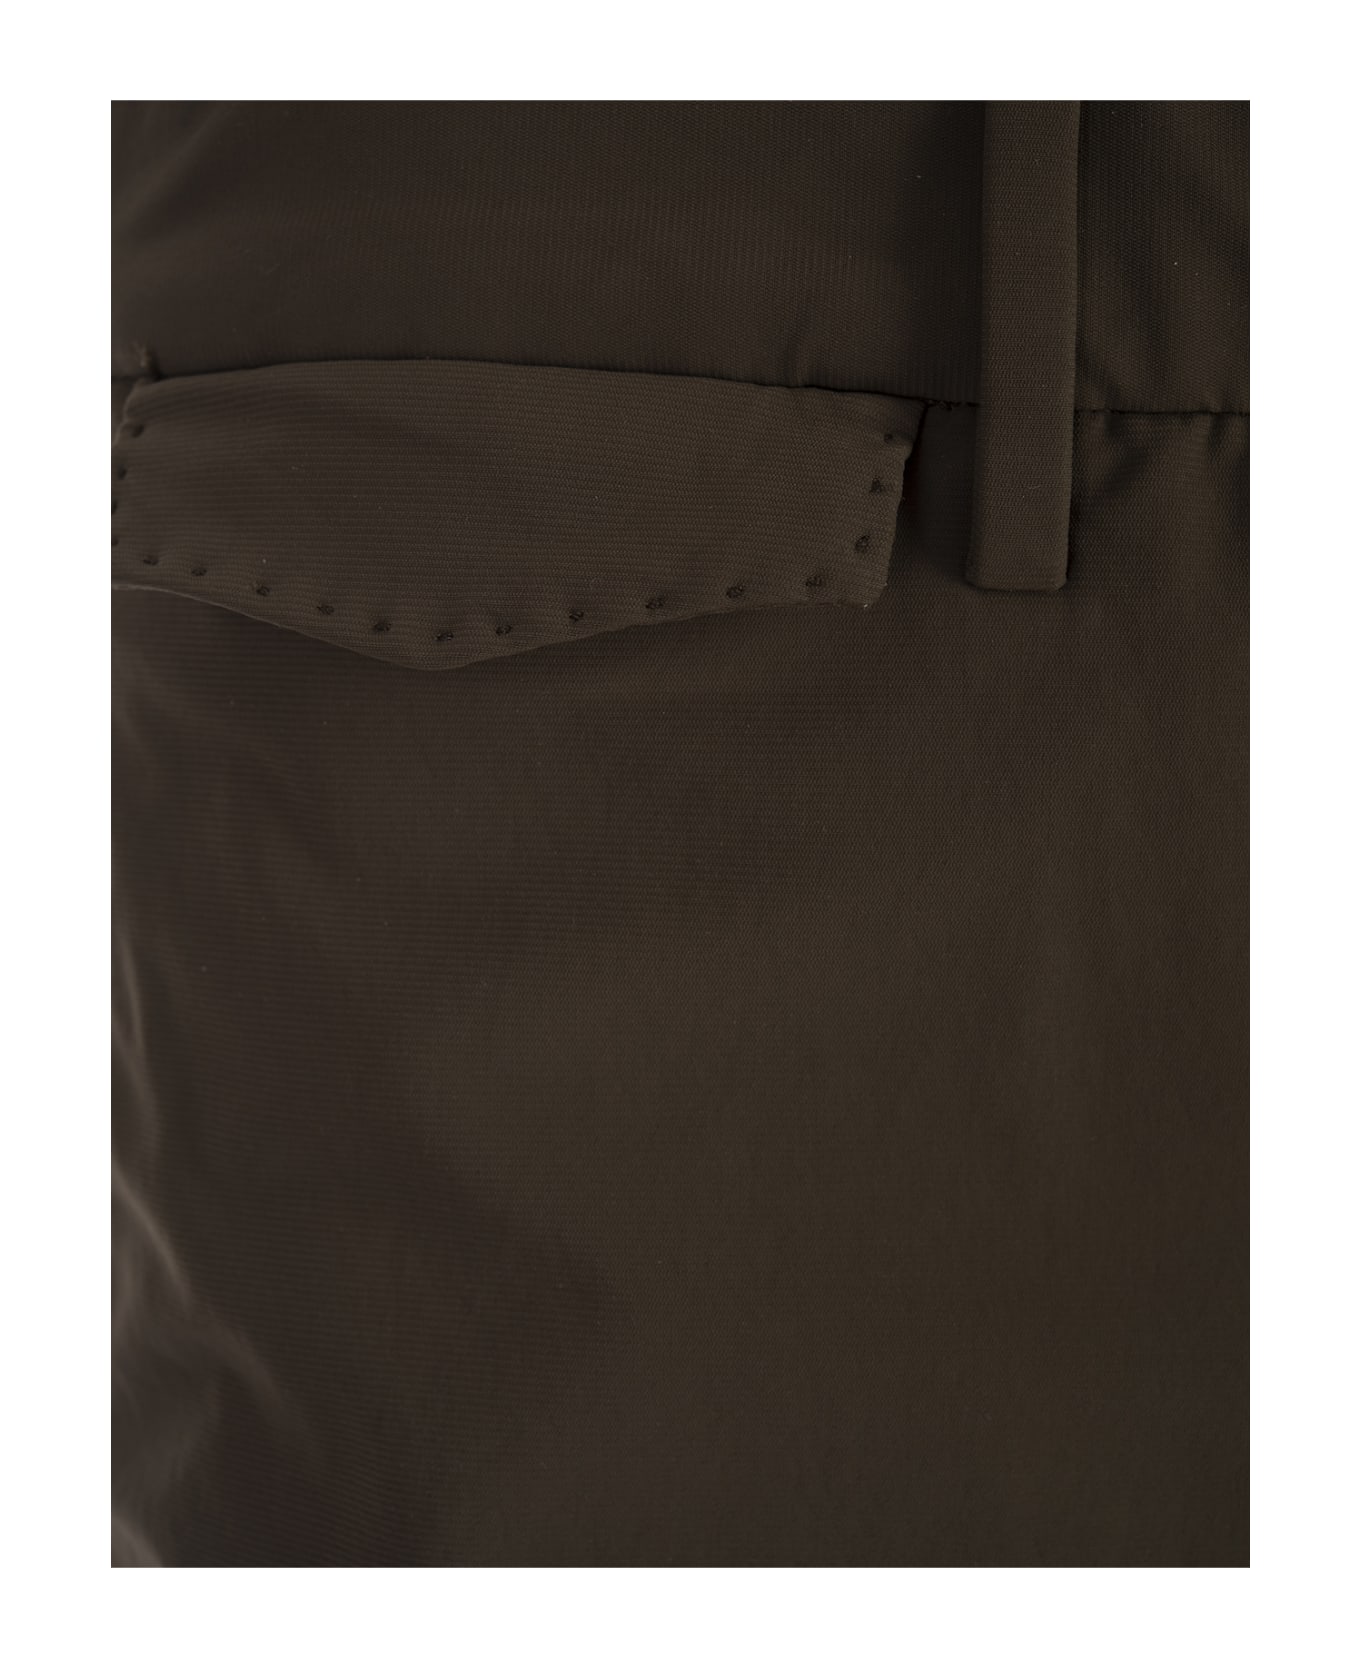 PT Bermuda Brown Stretch Cotton Shorts - Brown